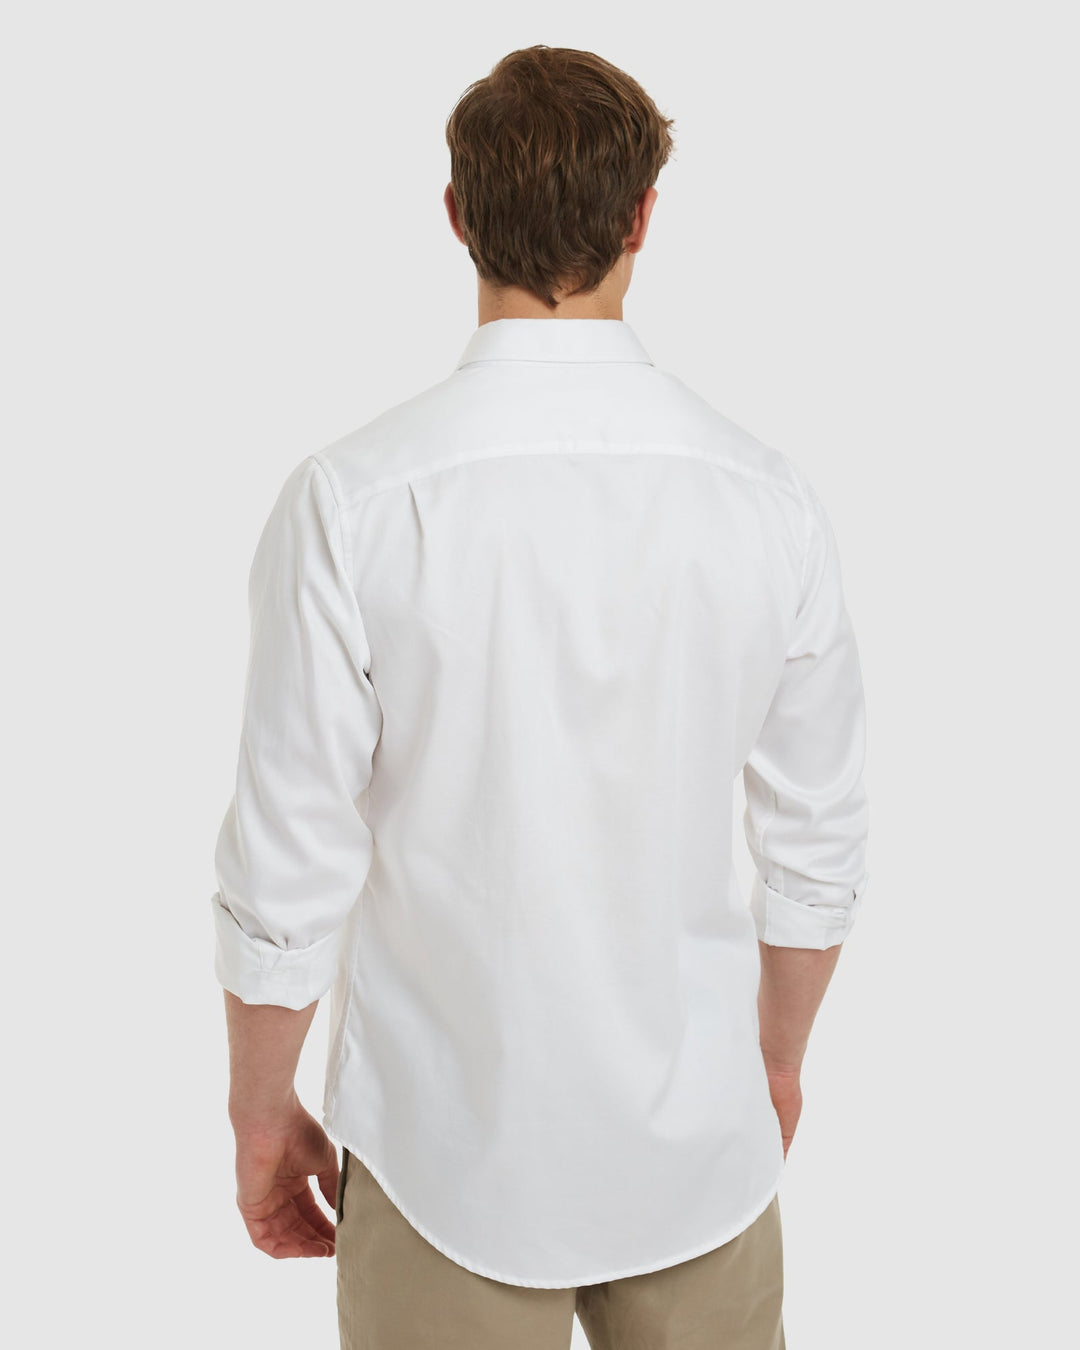 London Formal White Shirt  - Non Iron Slim Fit